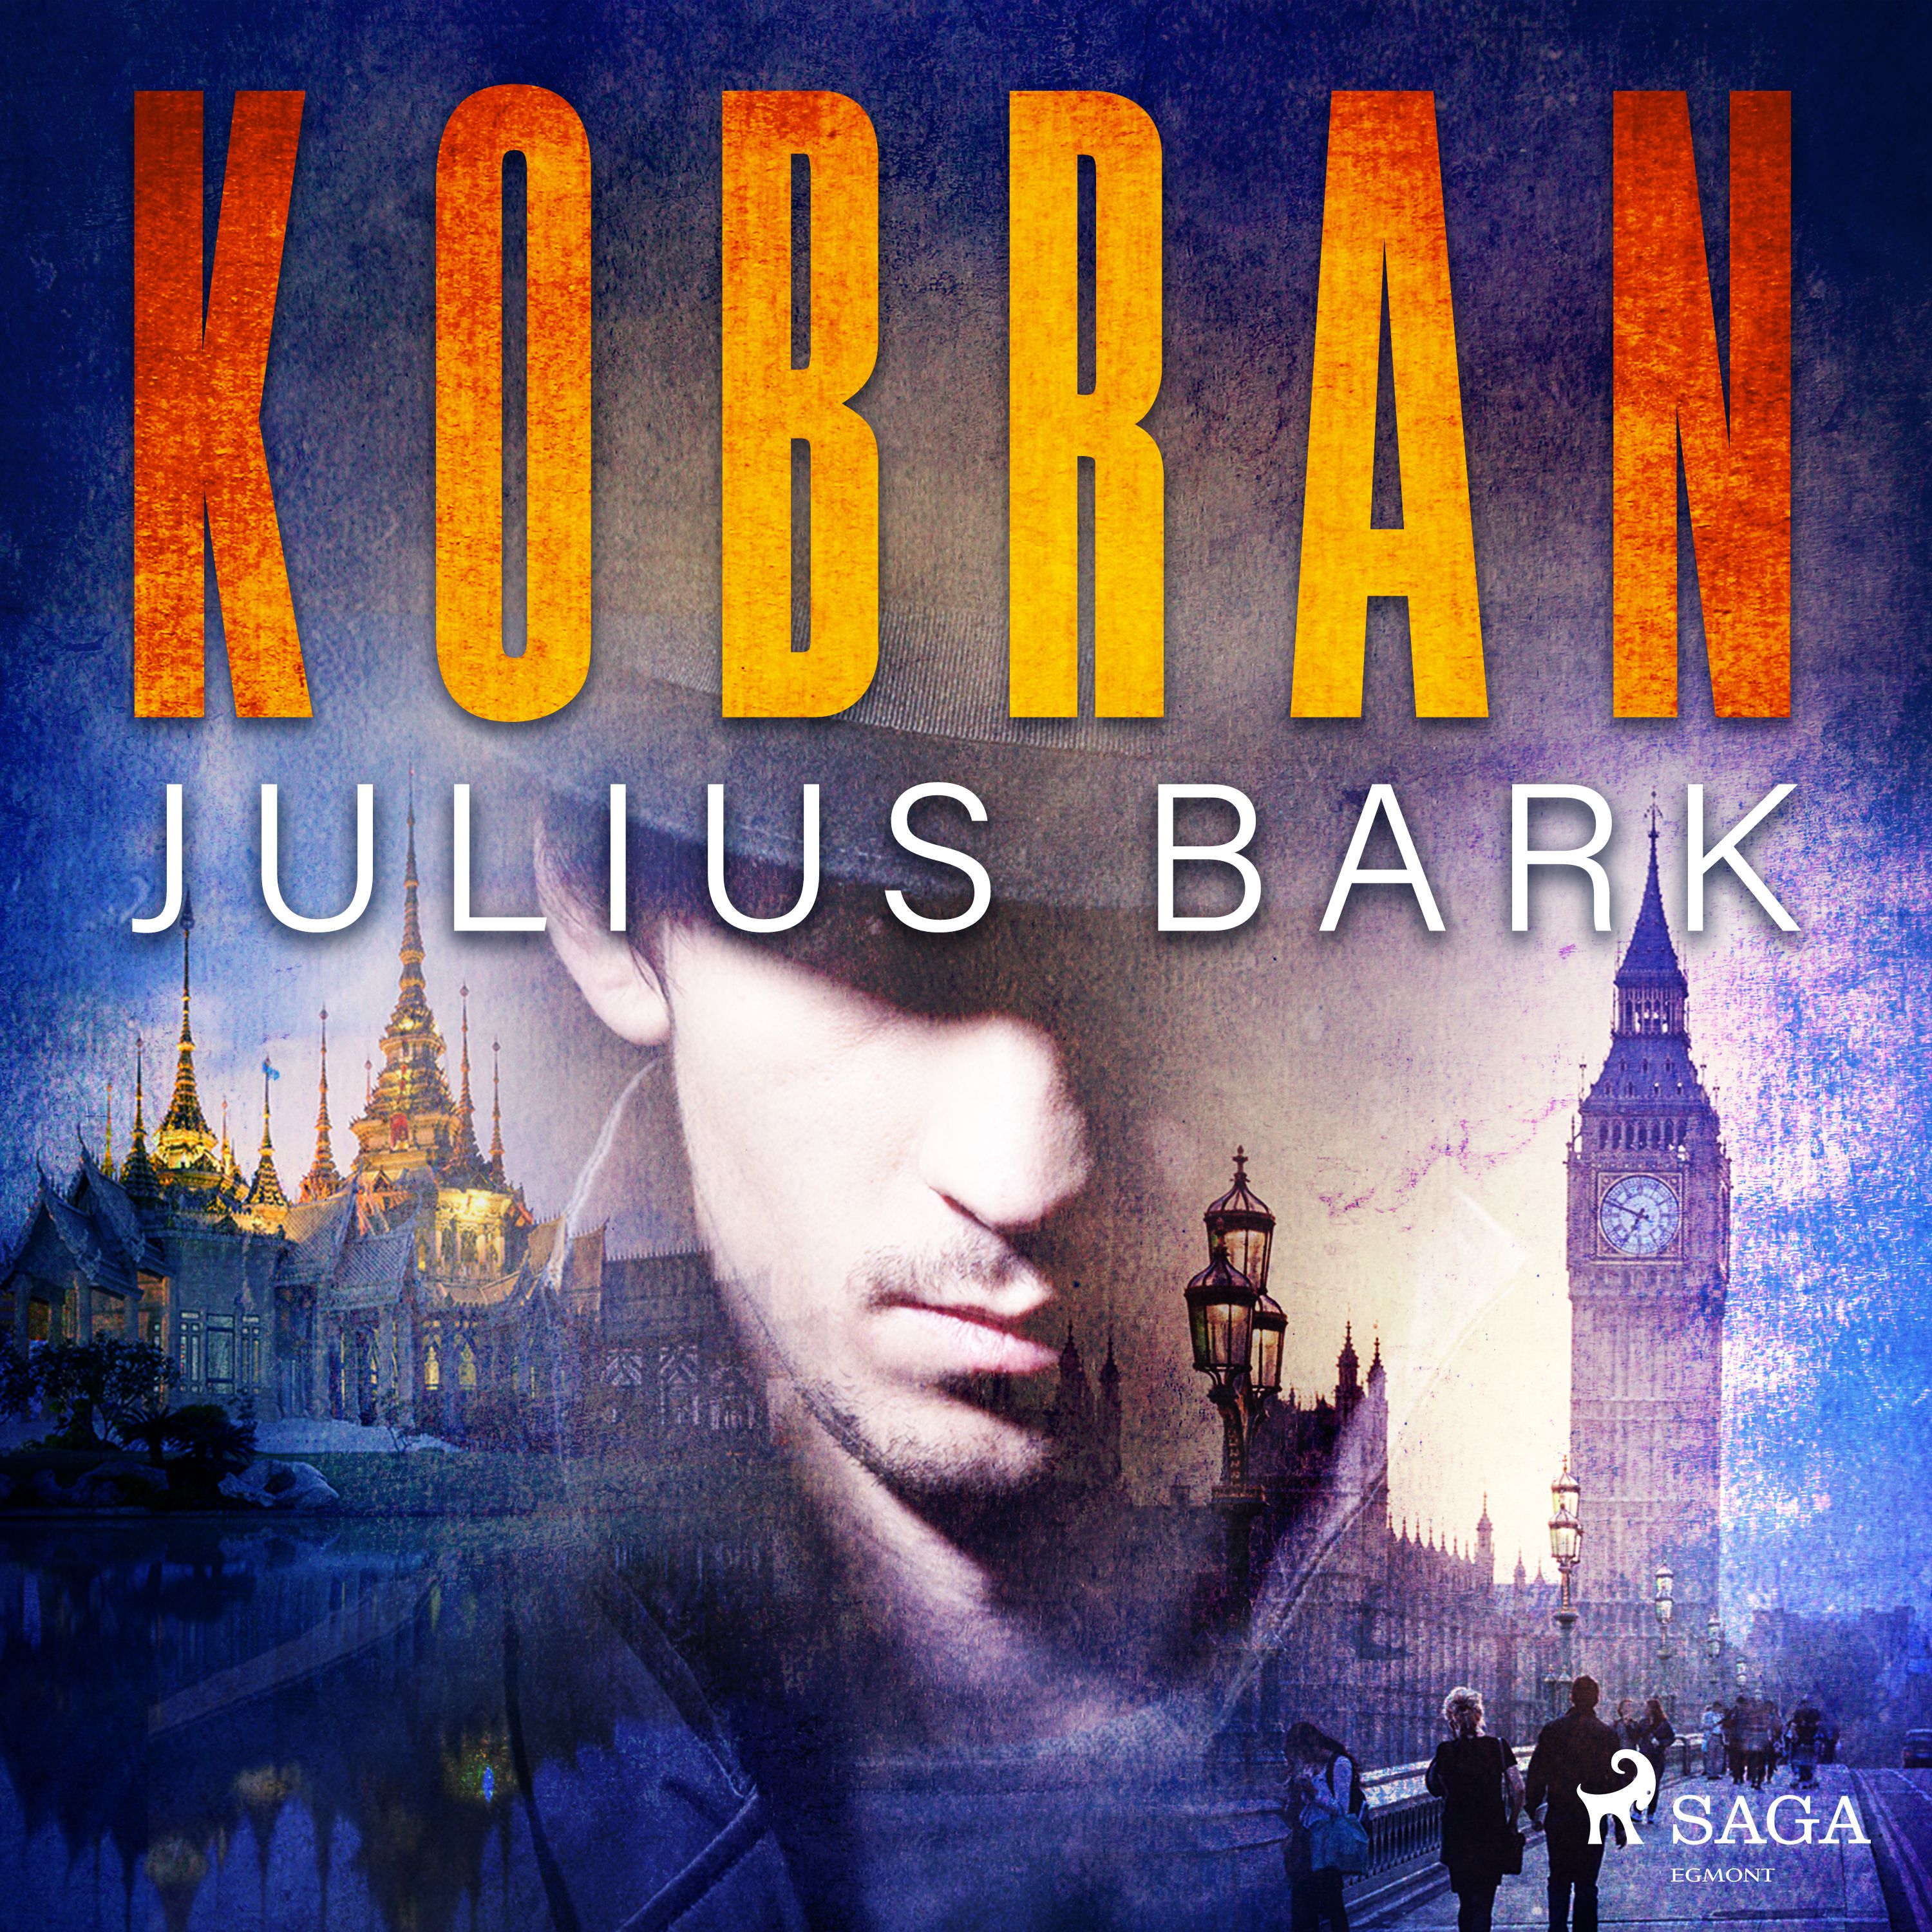 Kobran, lydbog af Julius Bark